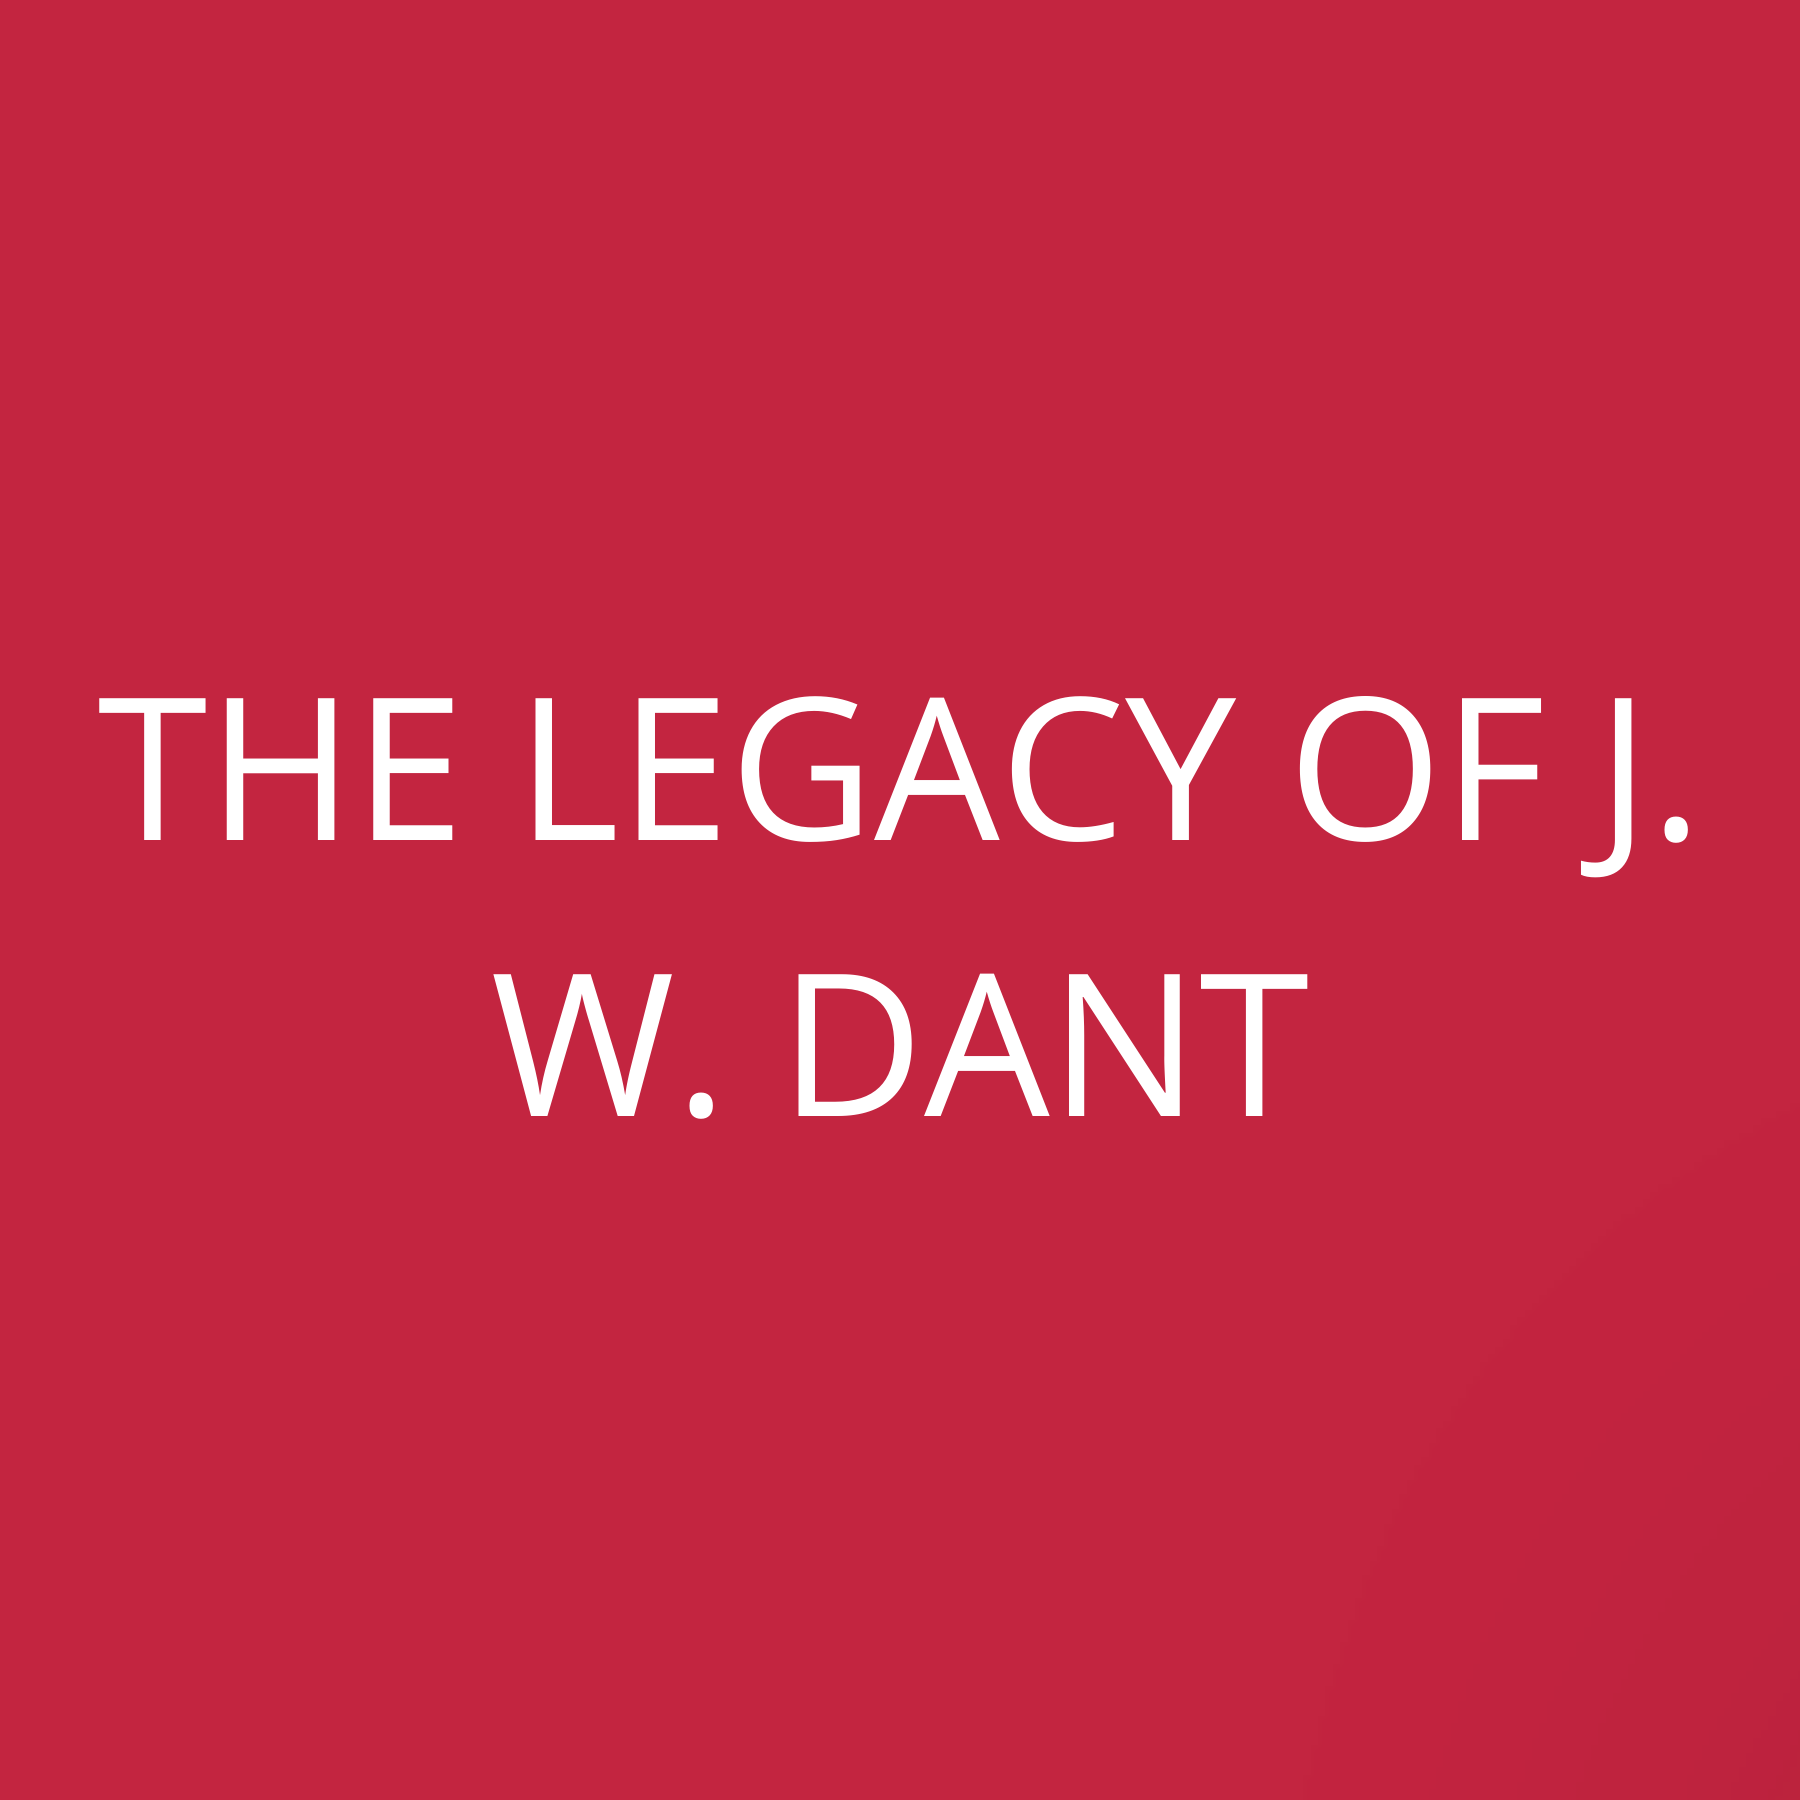 The legacy of J. W. Dant